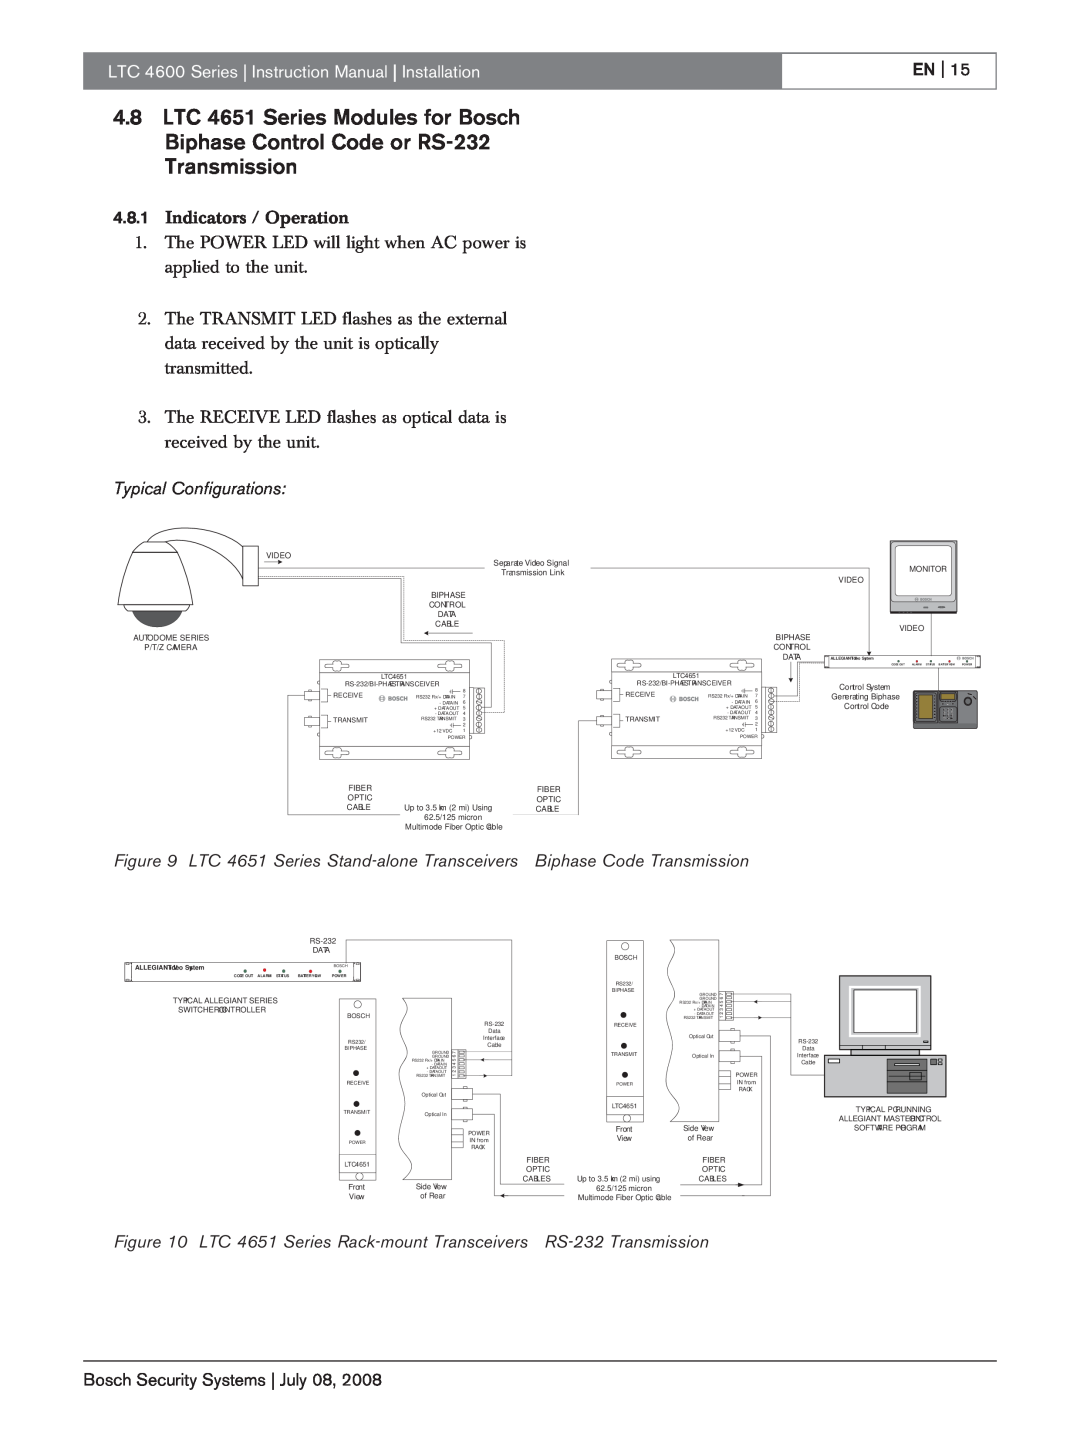 Bosch Appliances LTC 4600 instruction manual En, 4.8.1Indicators / Operation, Bosch Security Systems July 